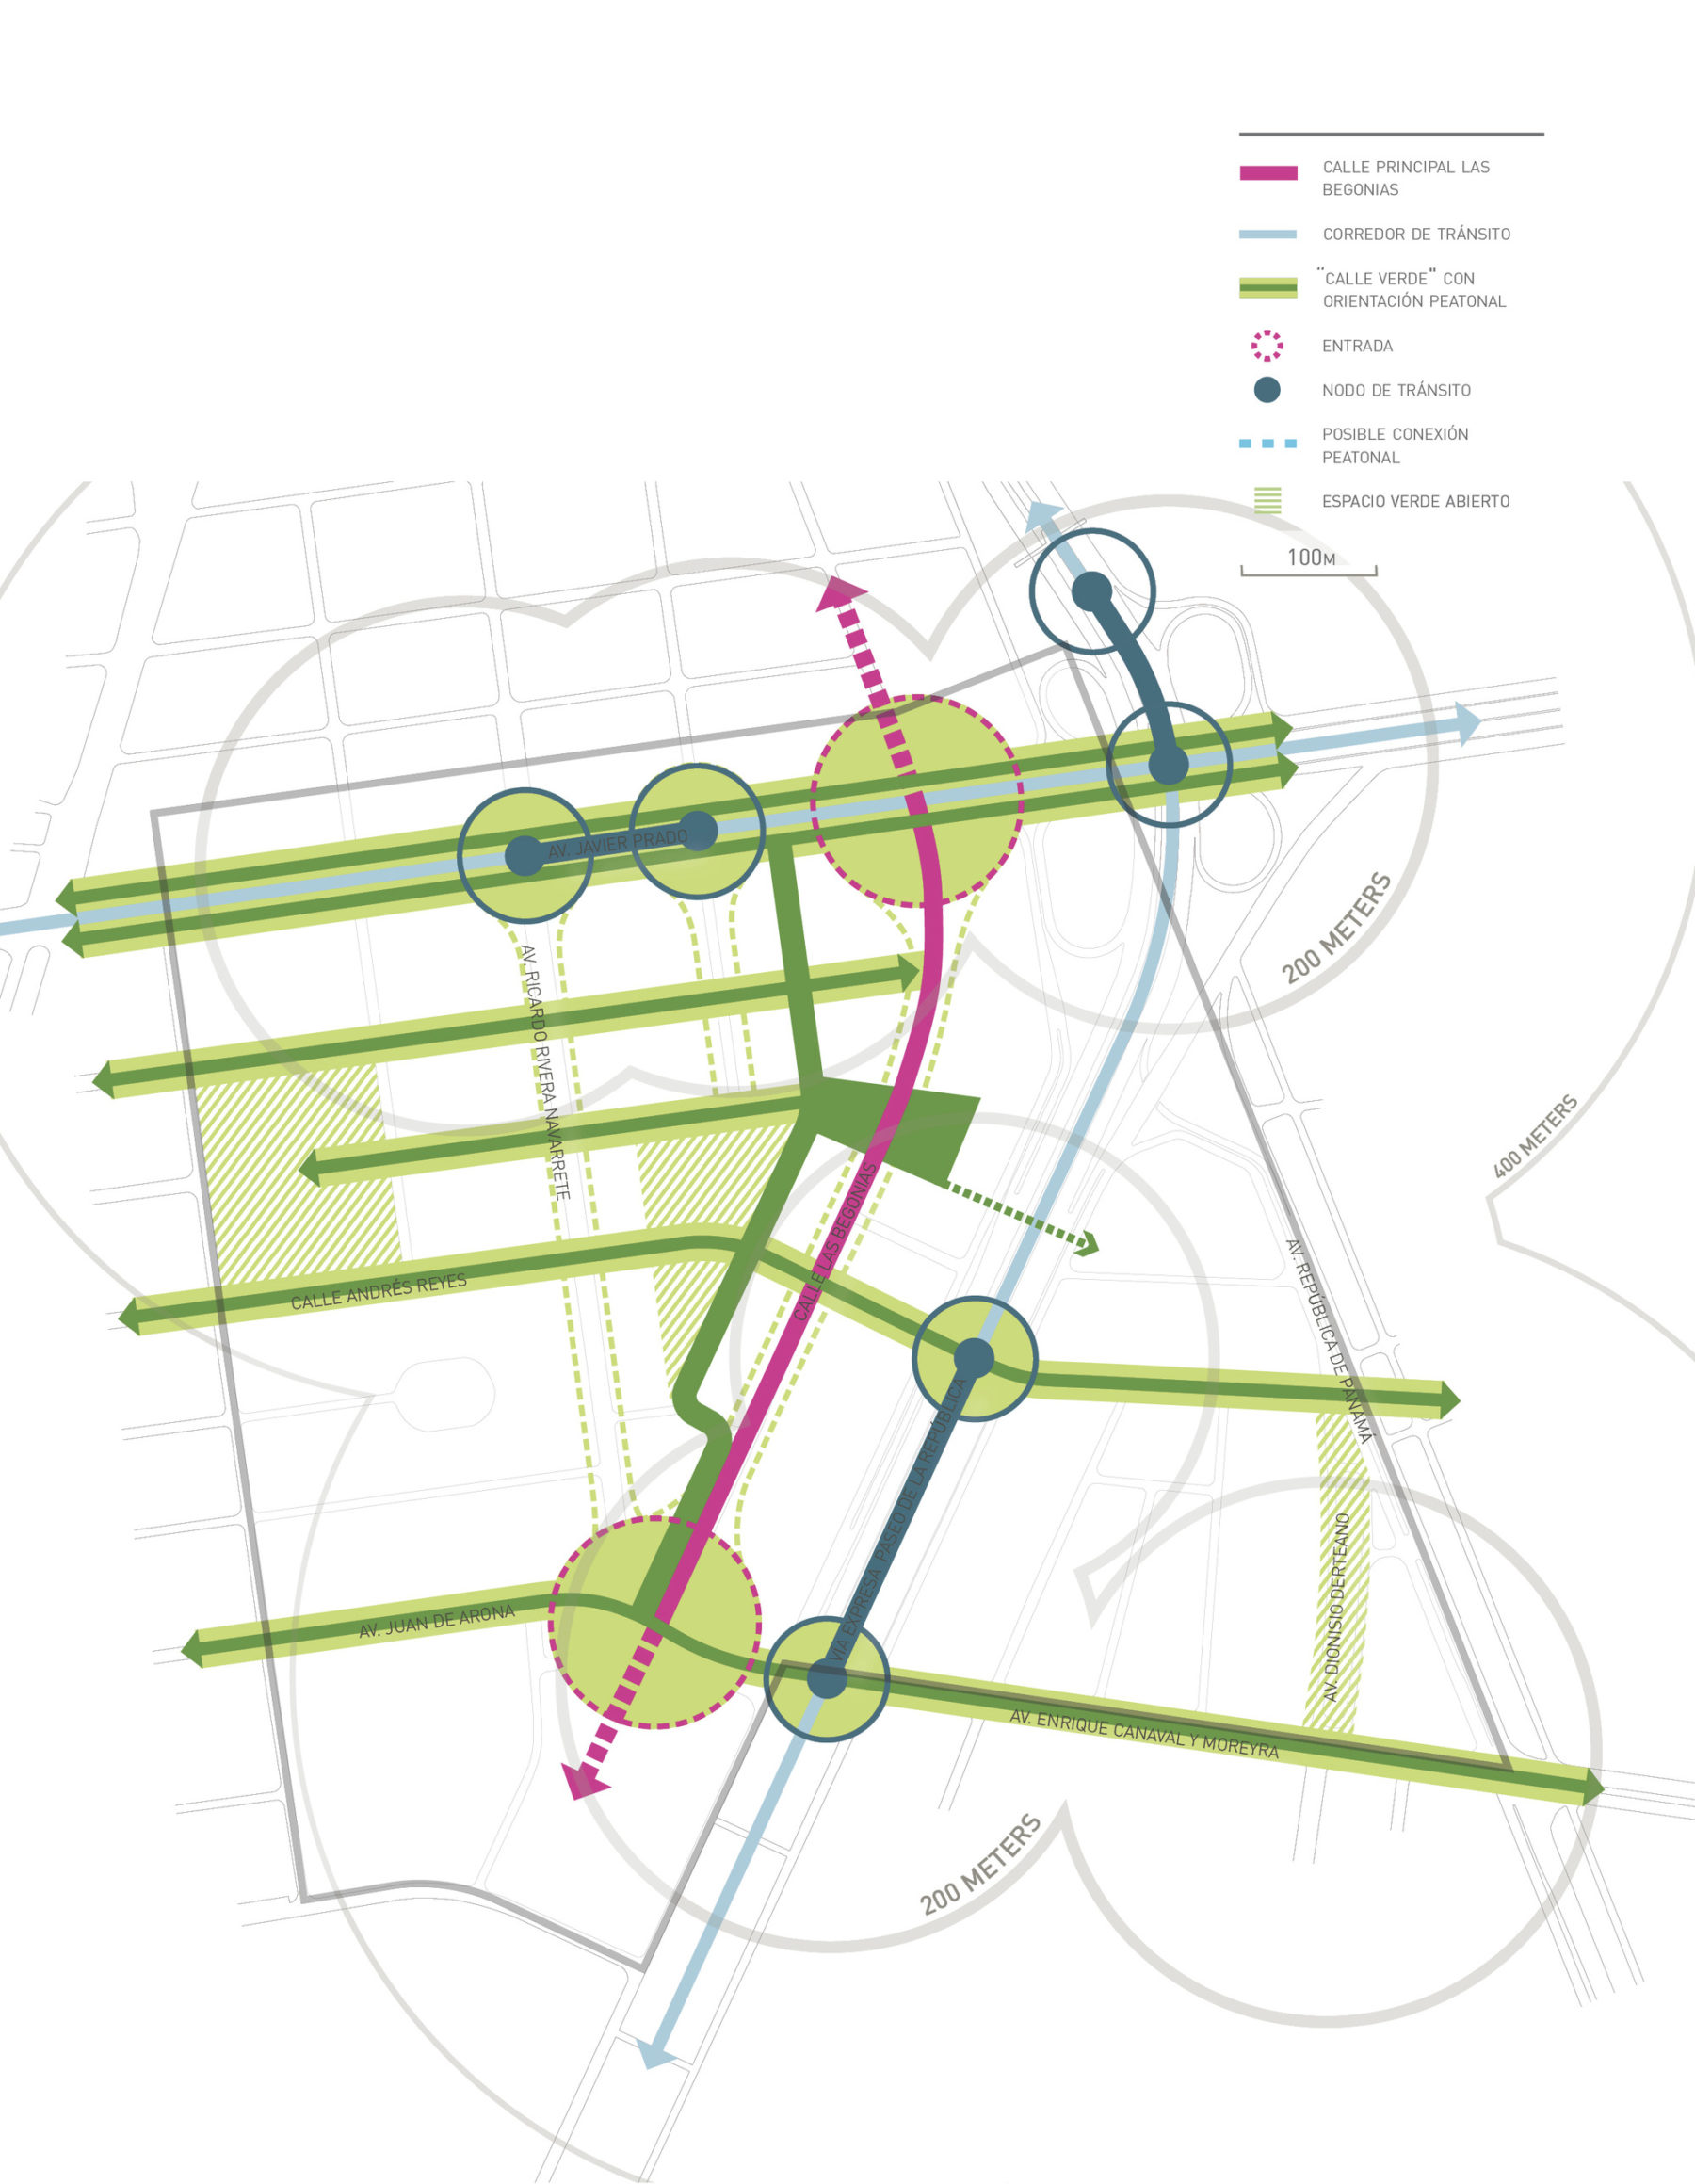 Diagram of major transportation routes into the Las Begonias Financial District